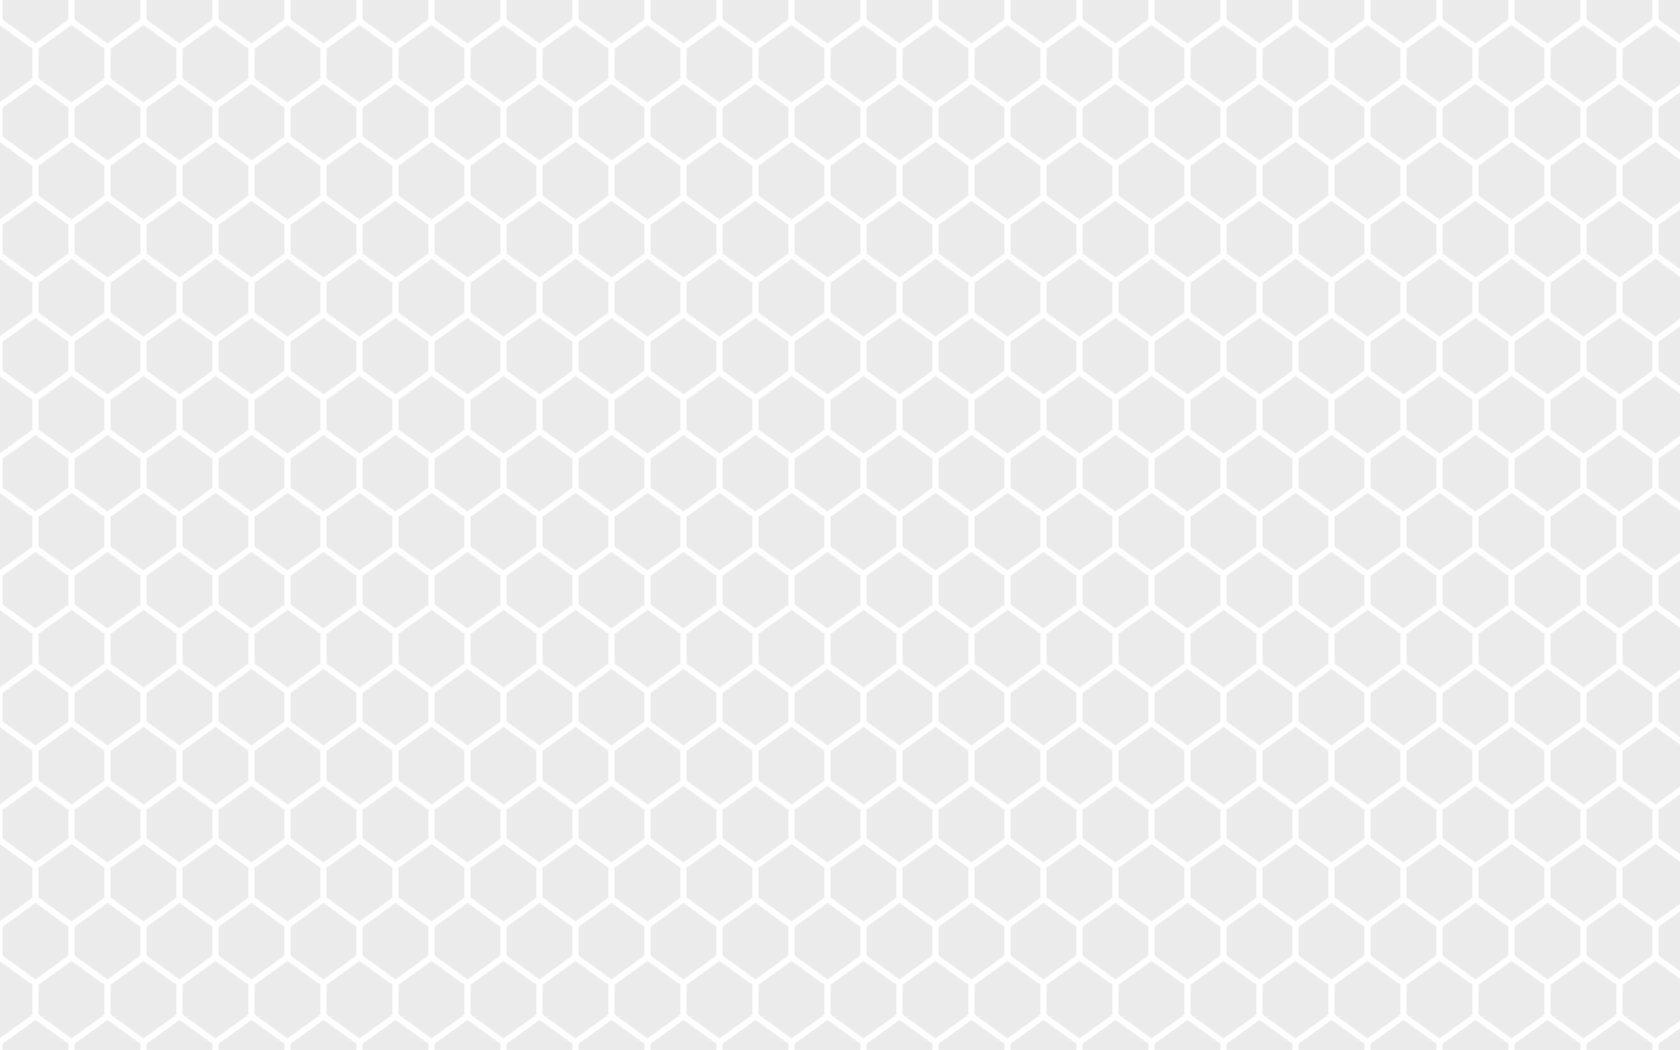 Ash Street Partners On Pinterest  Geometric Patterns Patterns   Clip Art